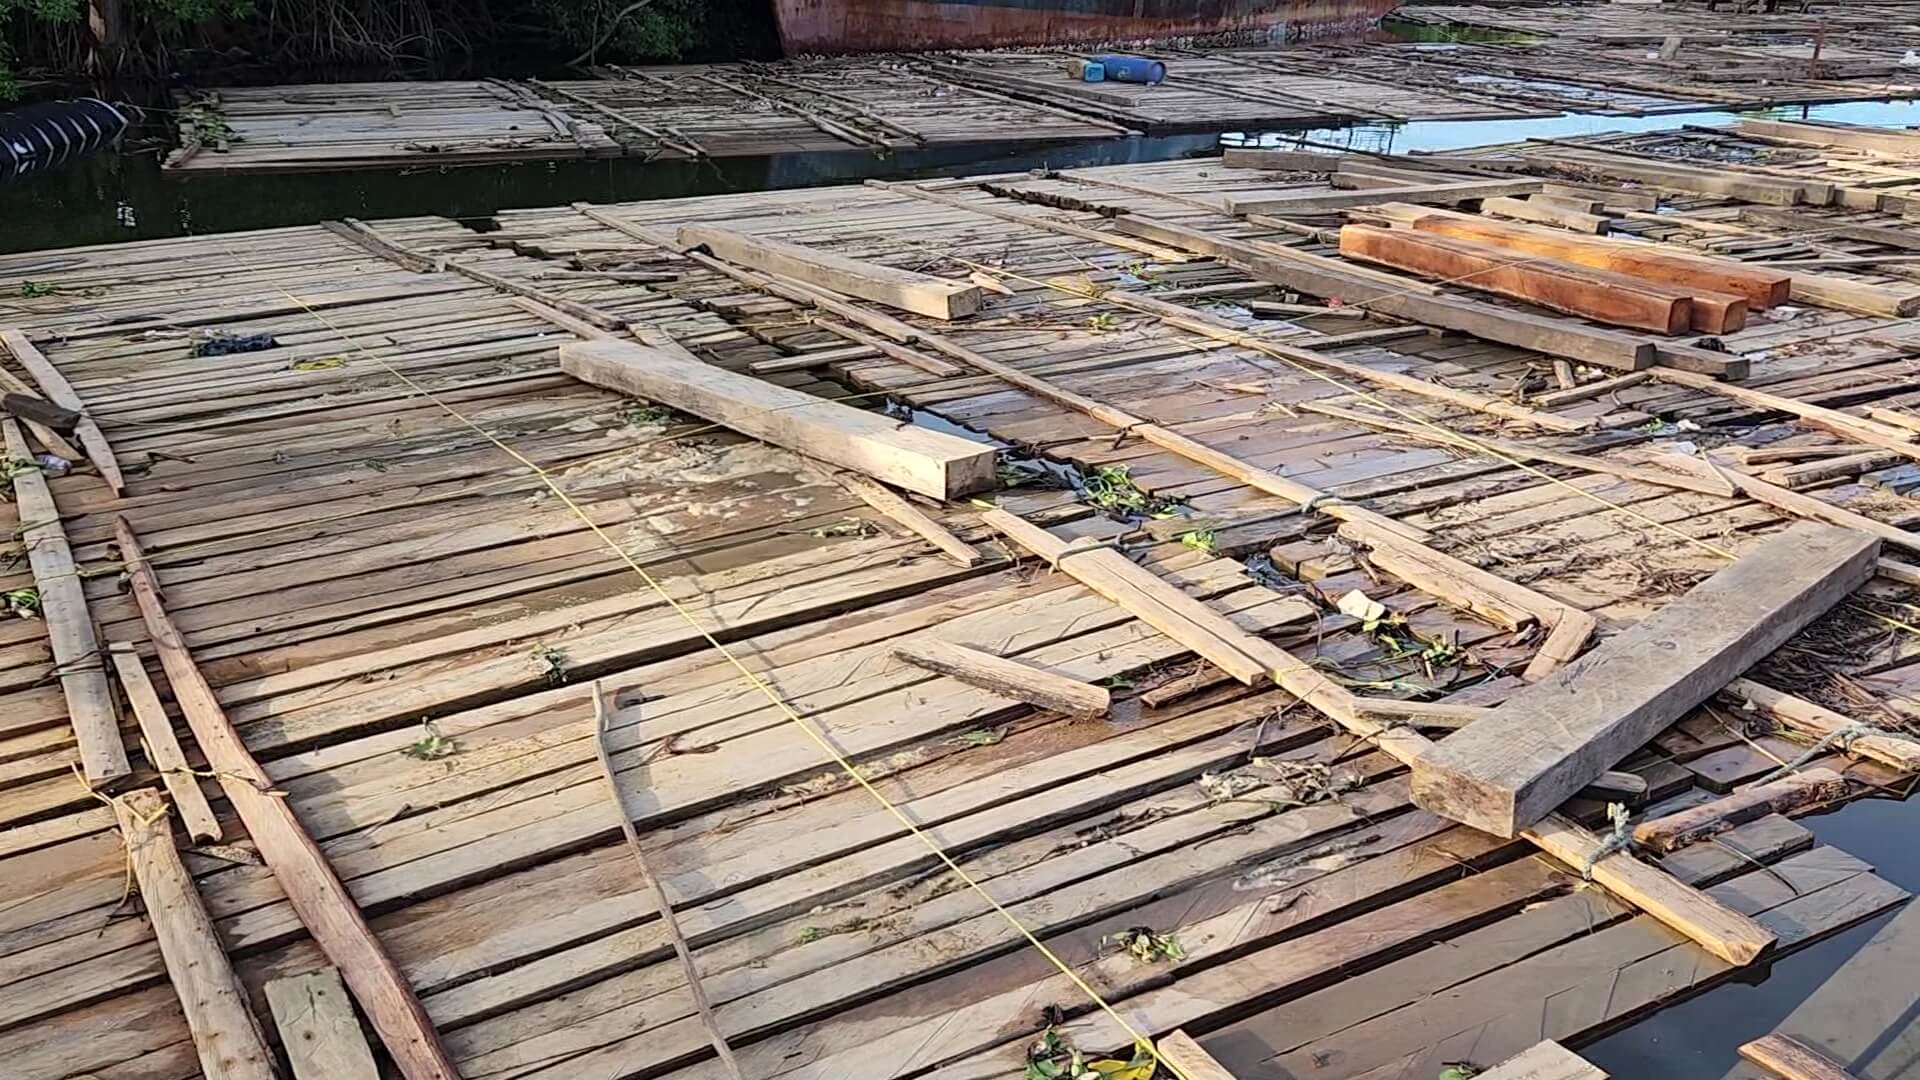 Incautados 215 metros cúbicos de madera en Urabá